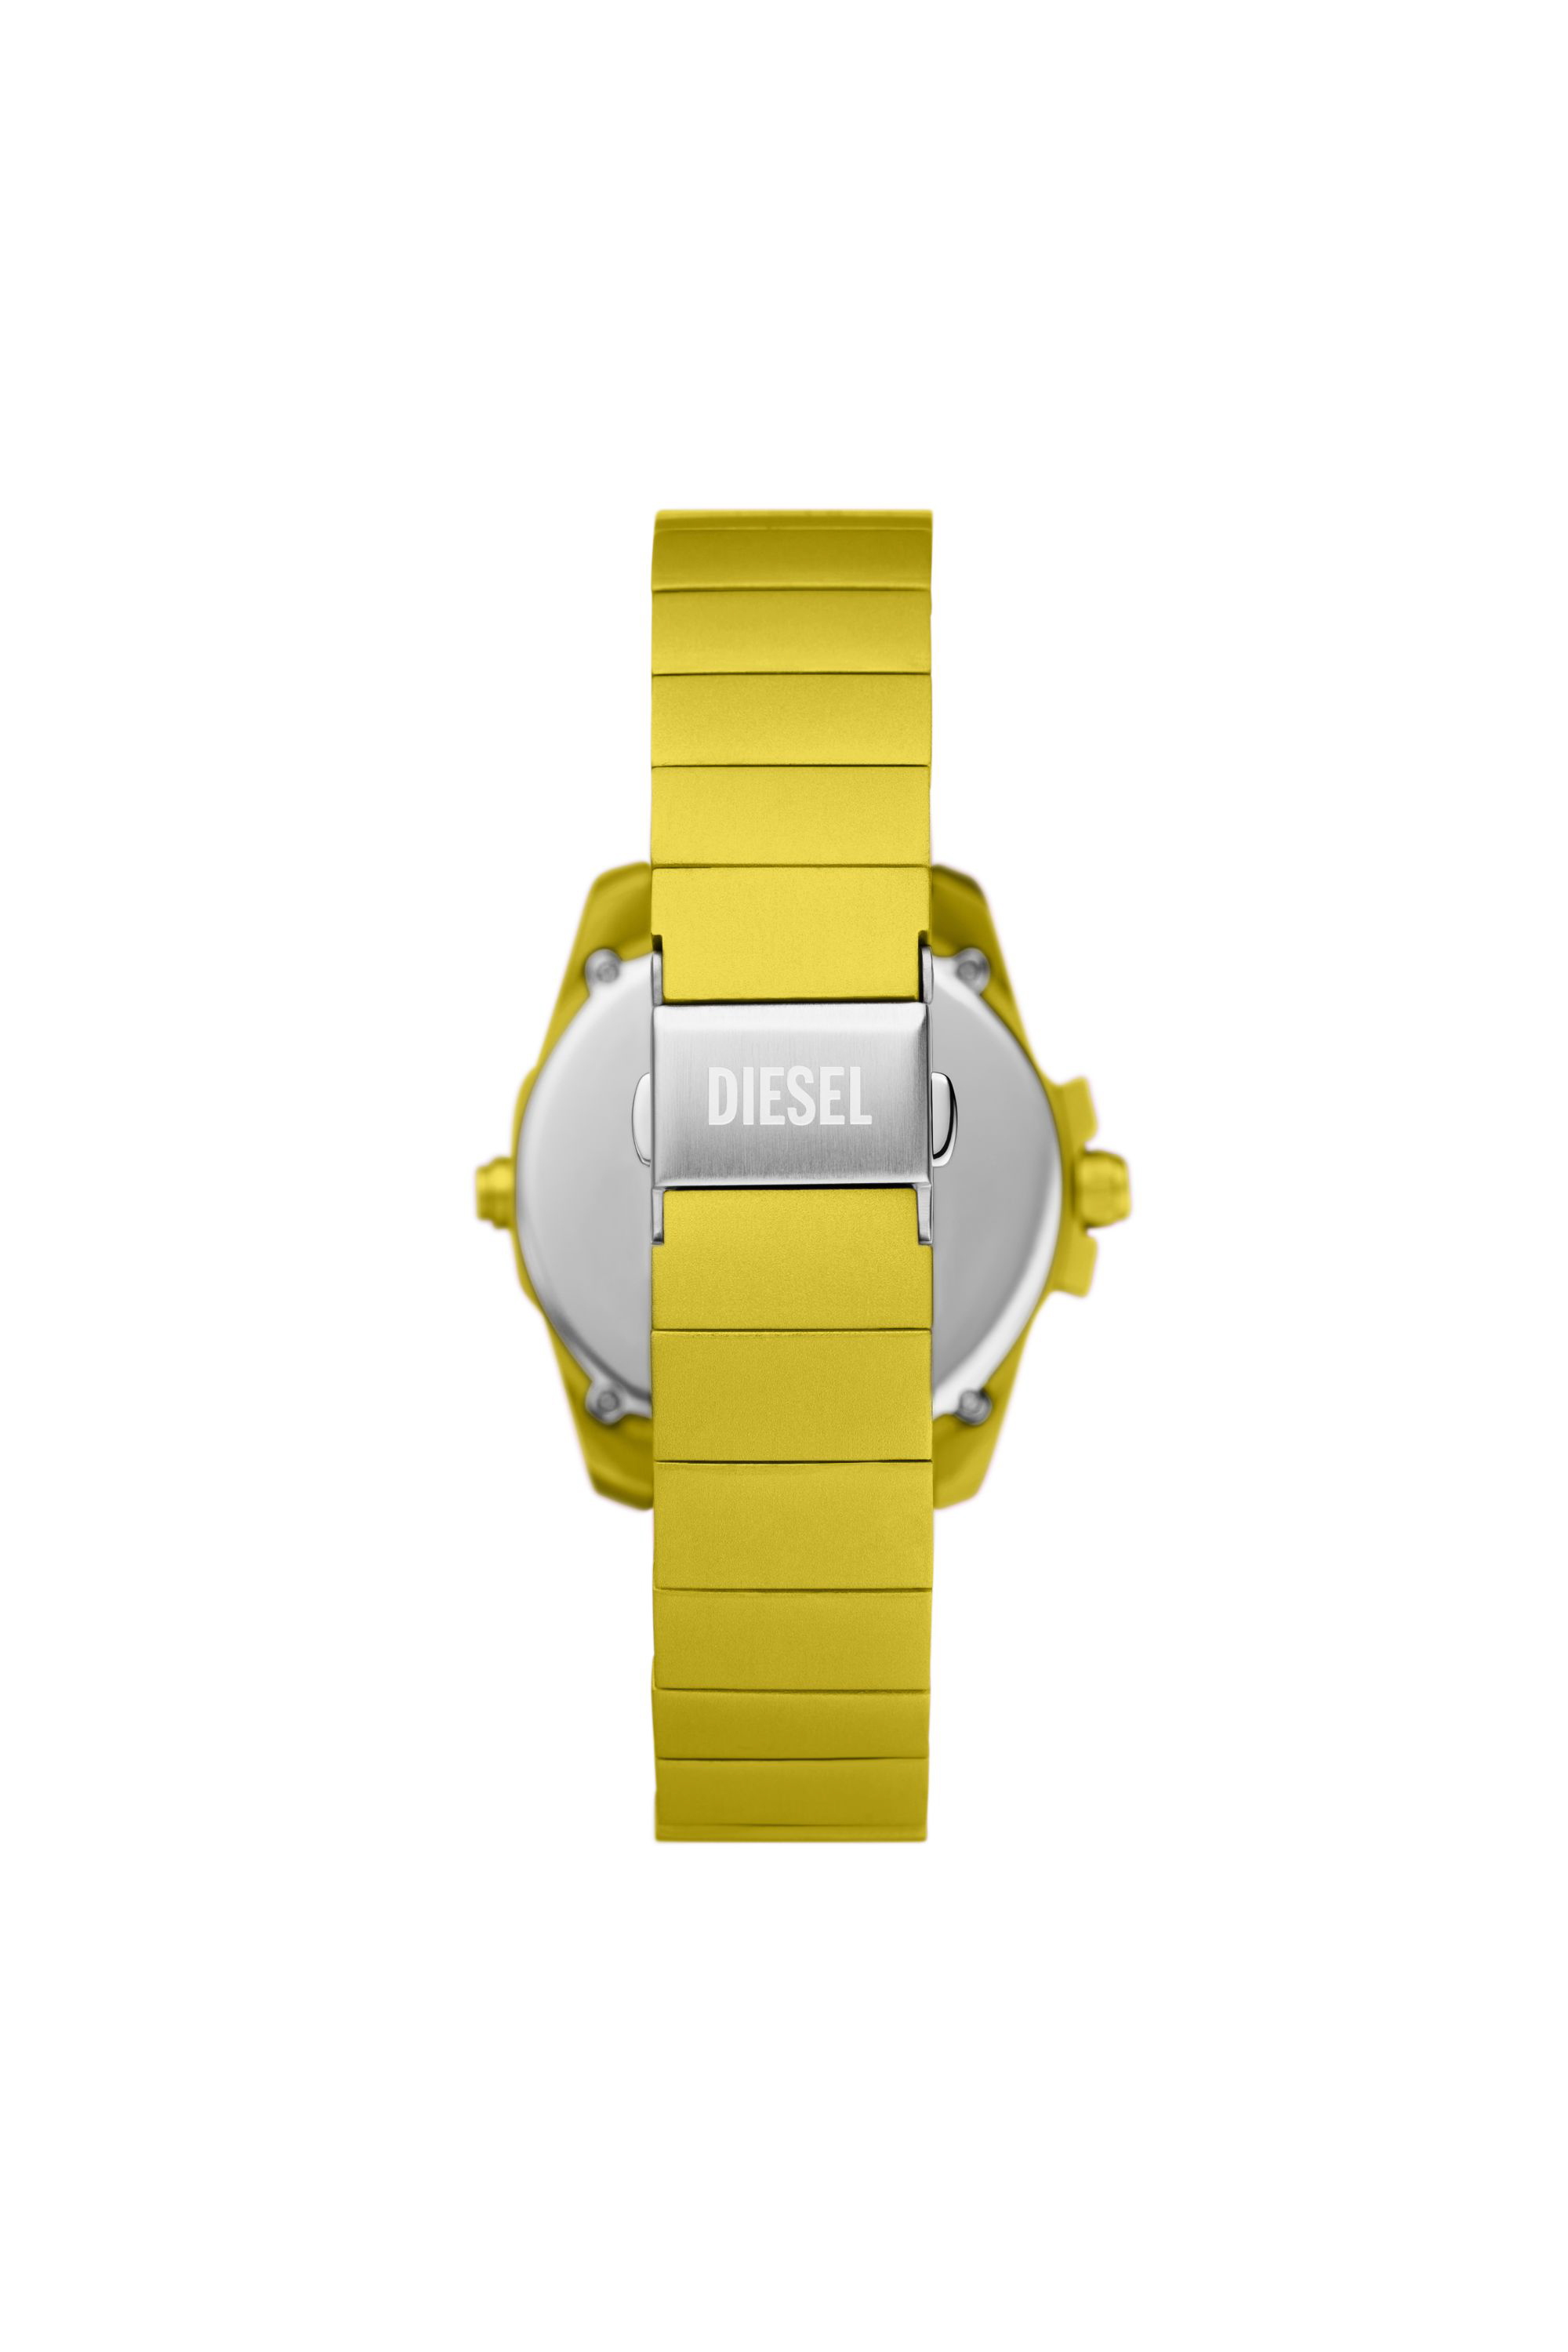 Diesel - DZ2207 WATCH, Man Baby chief digital yellow aluminum watch in Yellow - Image 2